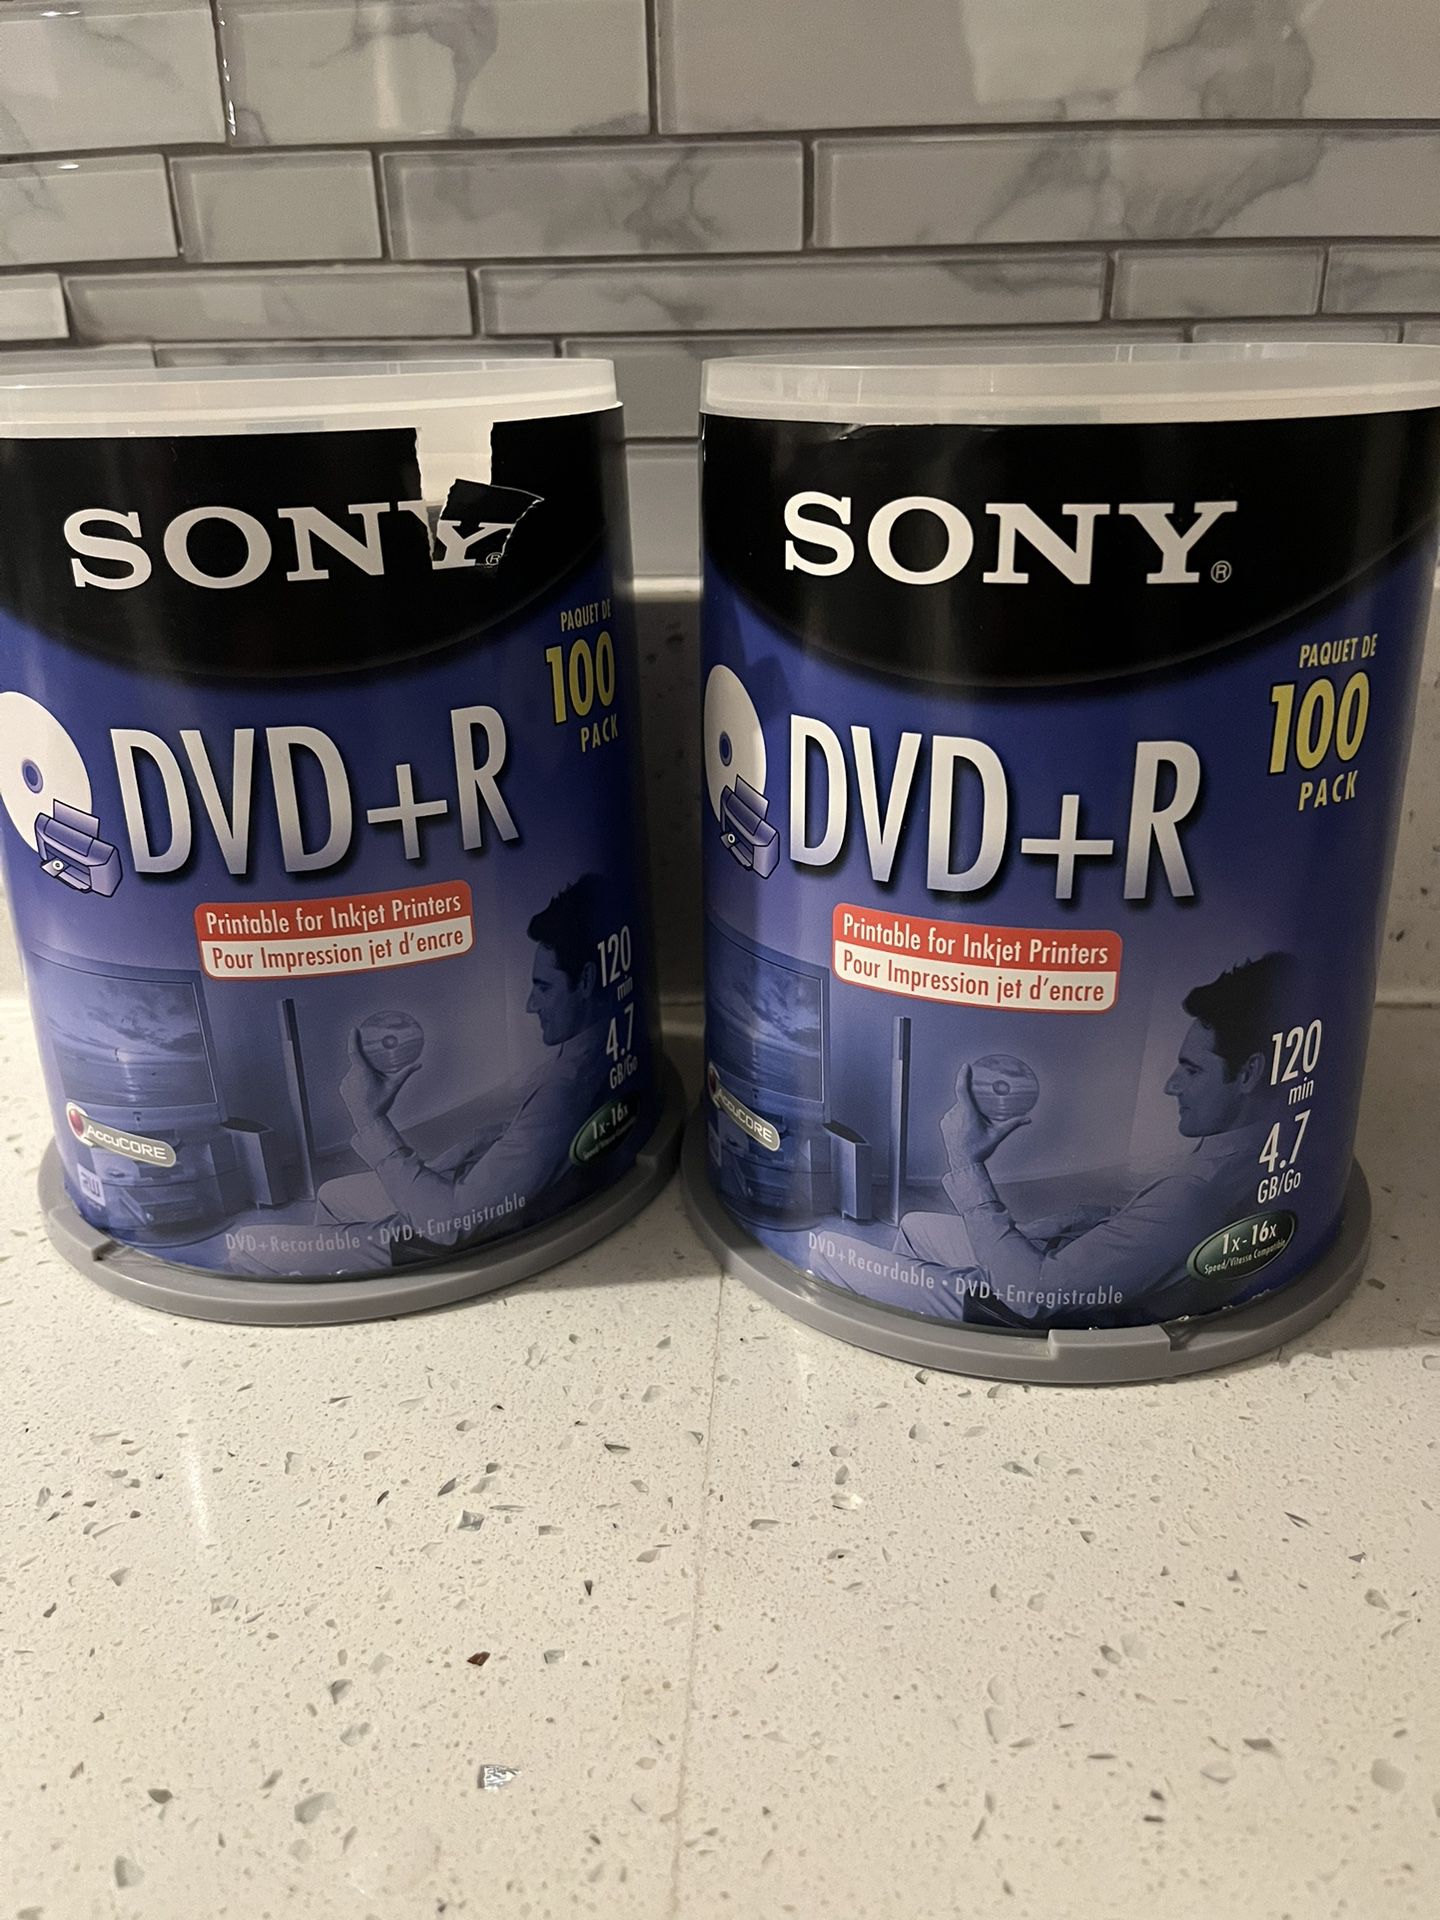 SONY brand DVD + R 4.7GB - Quantity 200 NEW